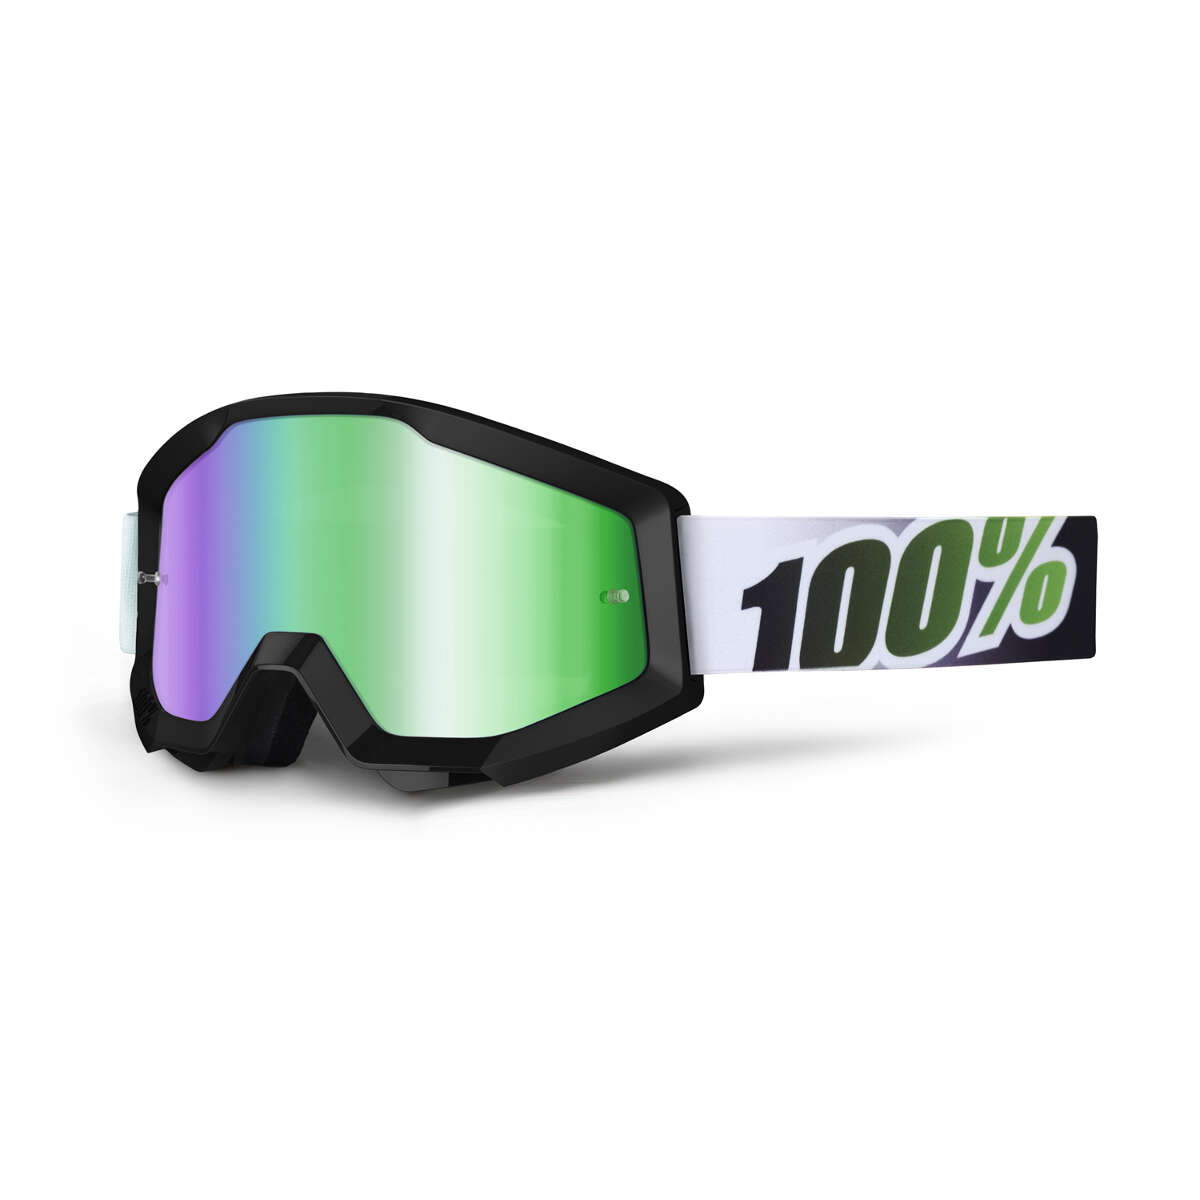 100% Crossbrille The Strata Black/Lime - Grün verspiegelt Anti-Fog